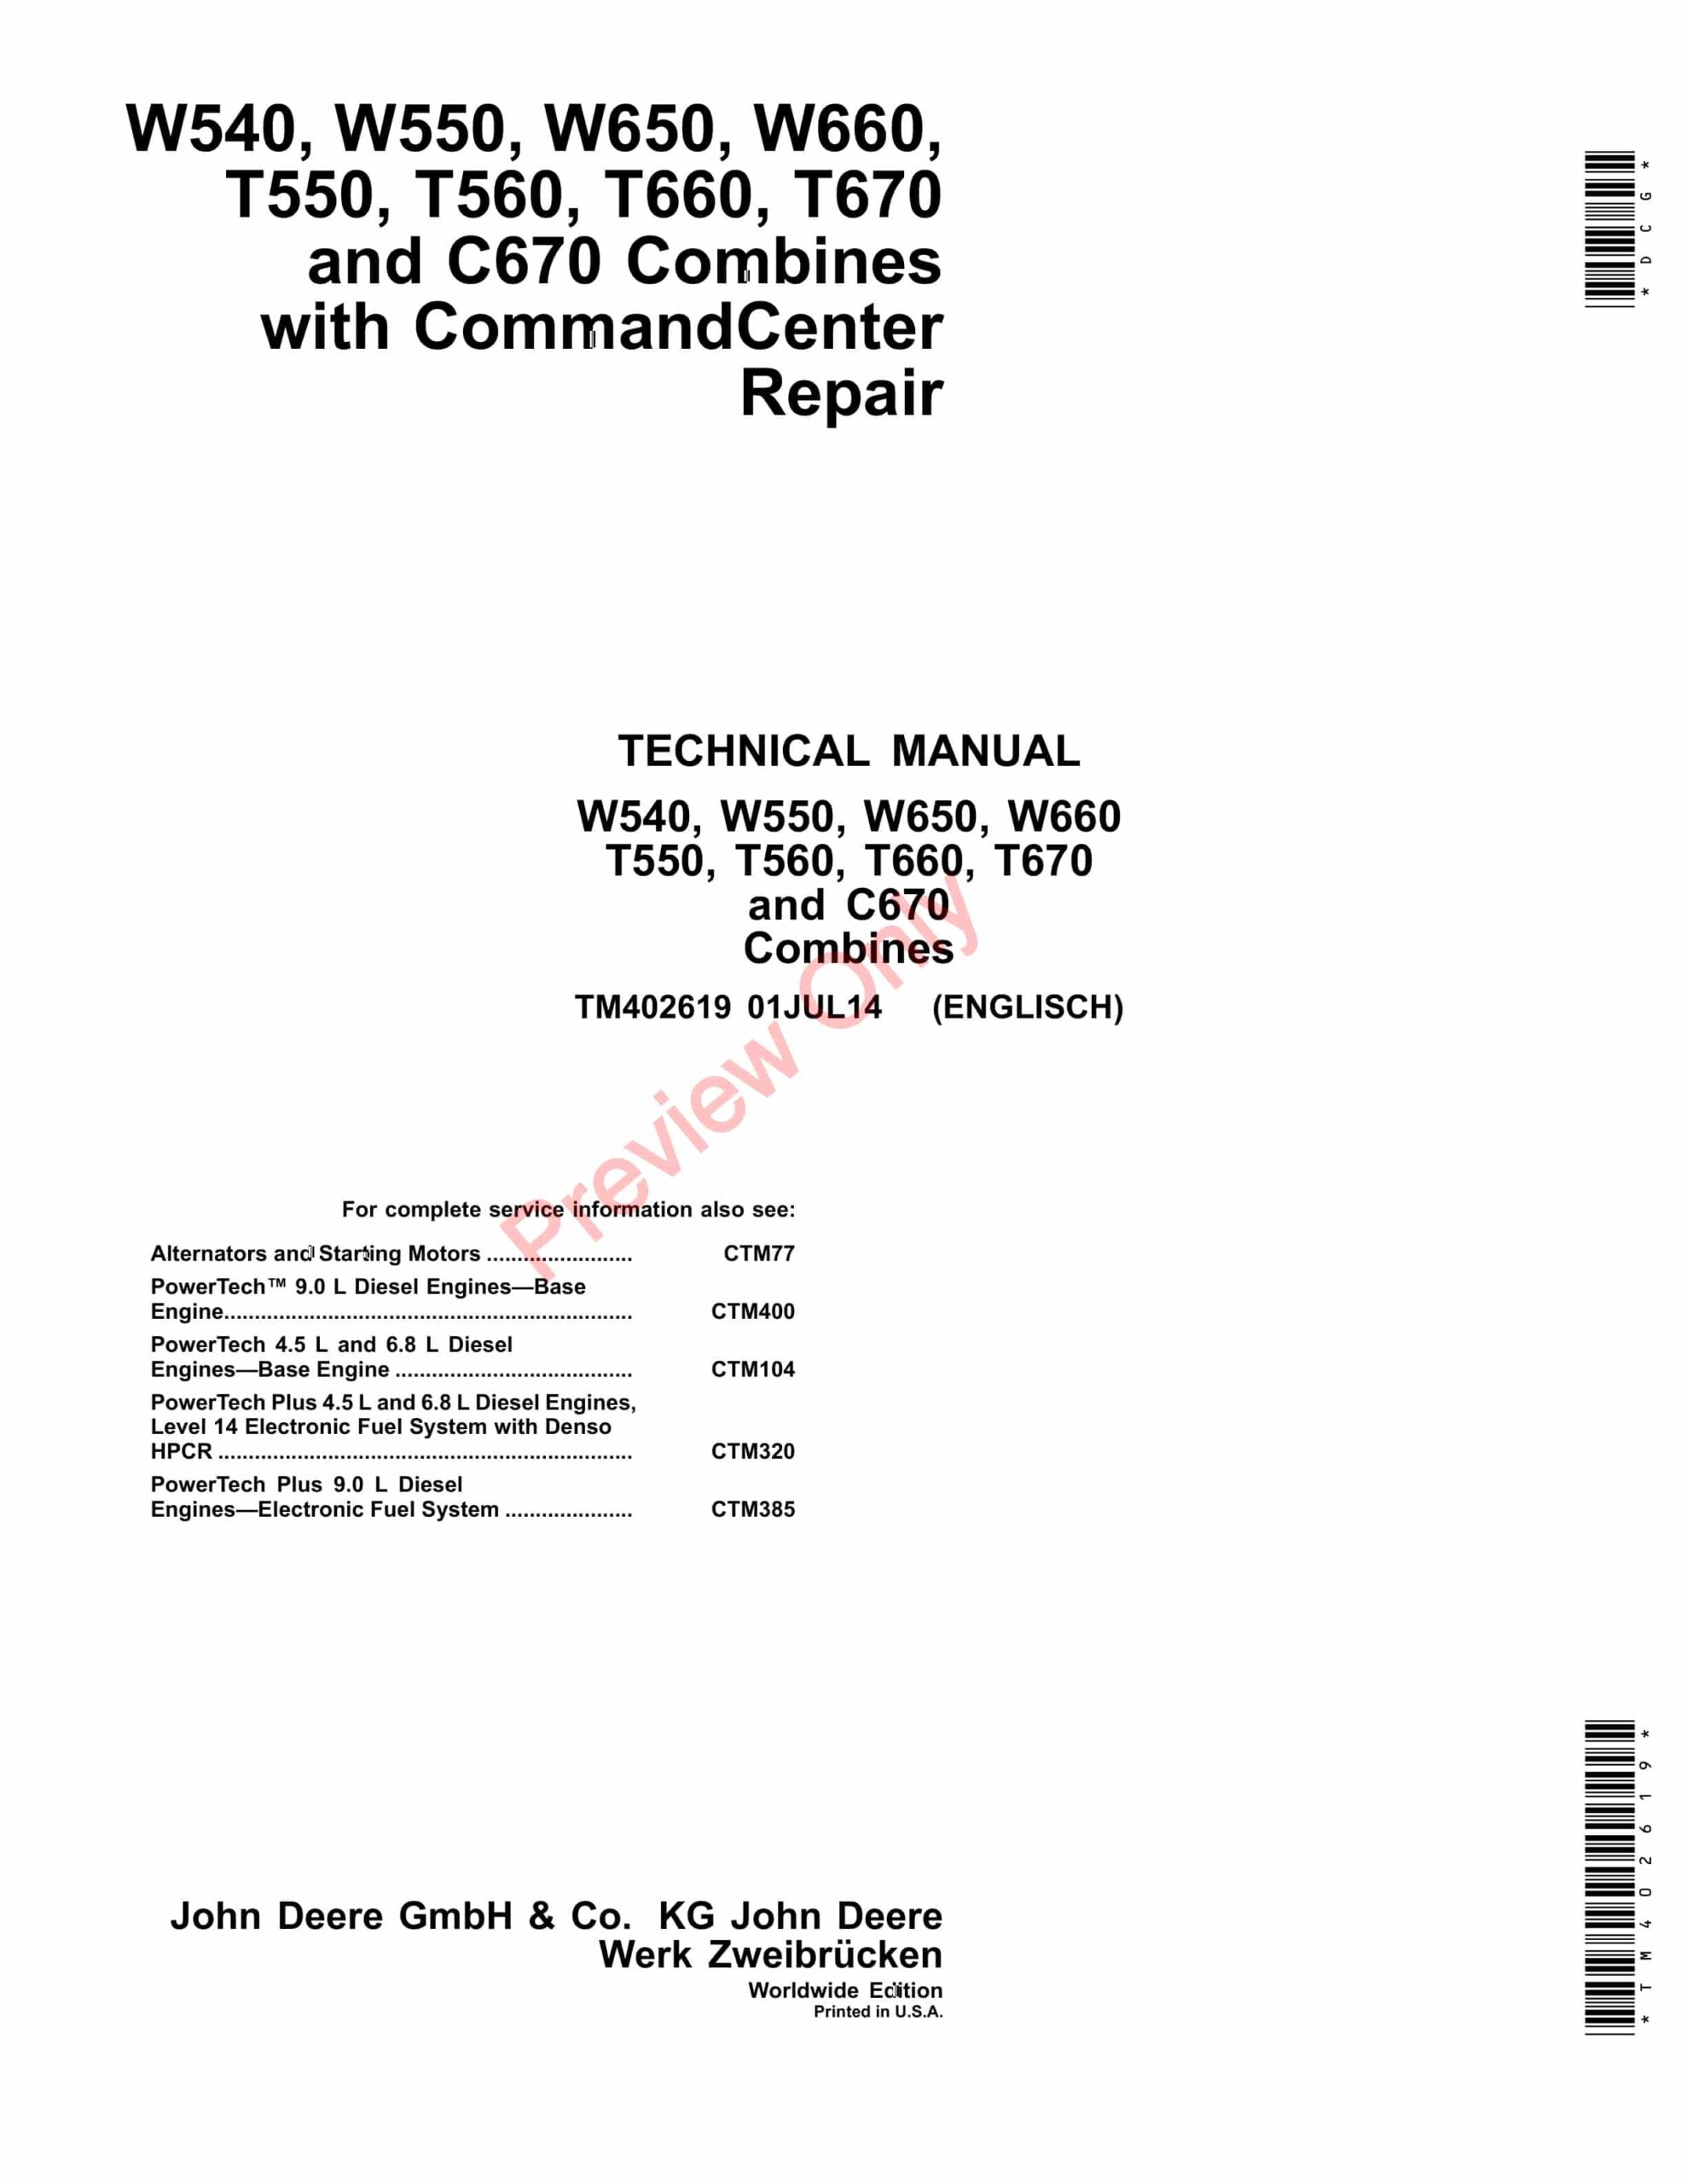 John Deere W540, W550, W560, W660, T550, T560, T660, T670 , C670 Combine Technical Manual TM402619 01JUL14-1